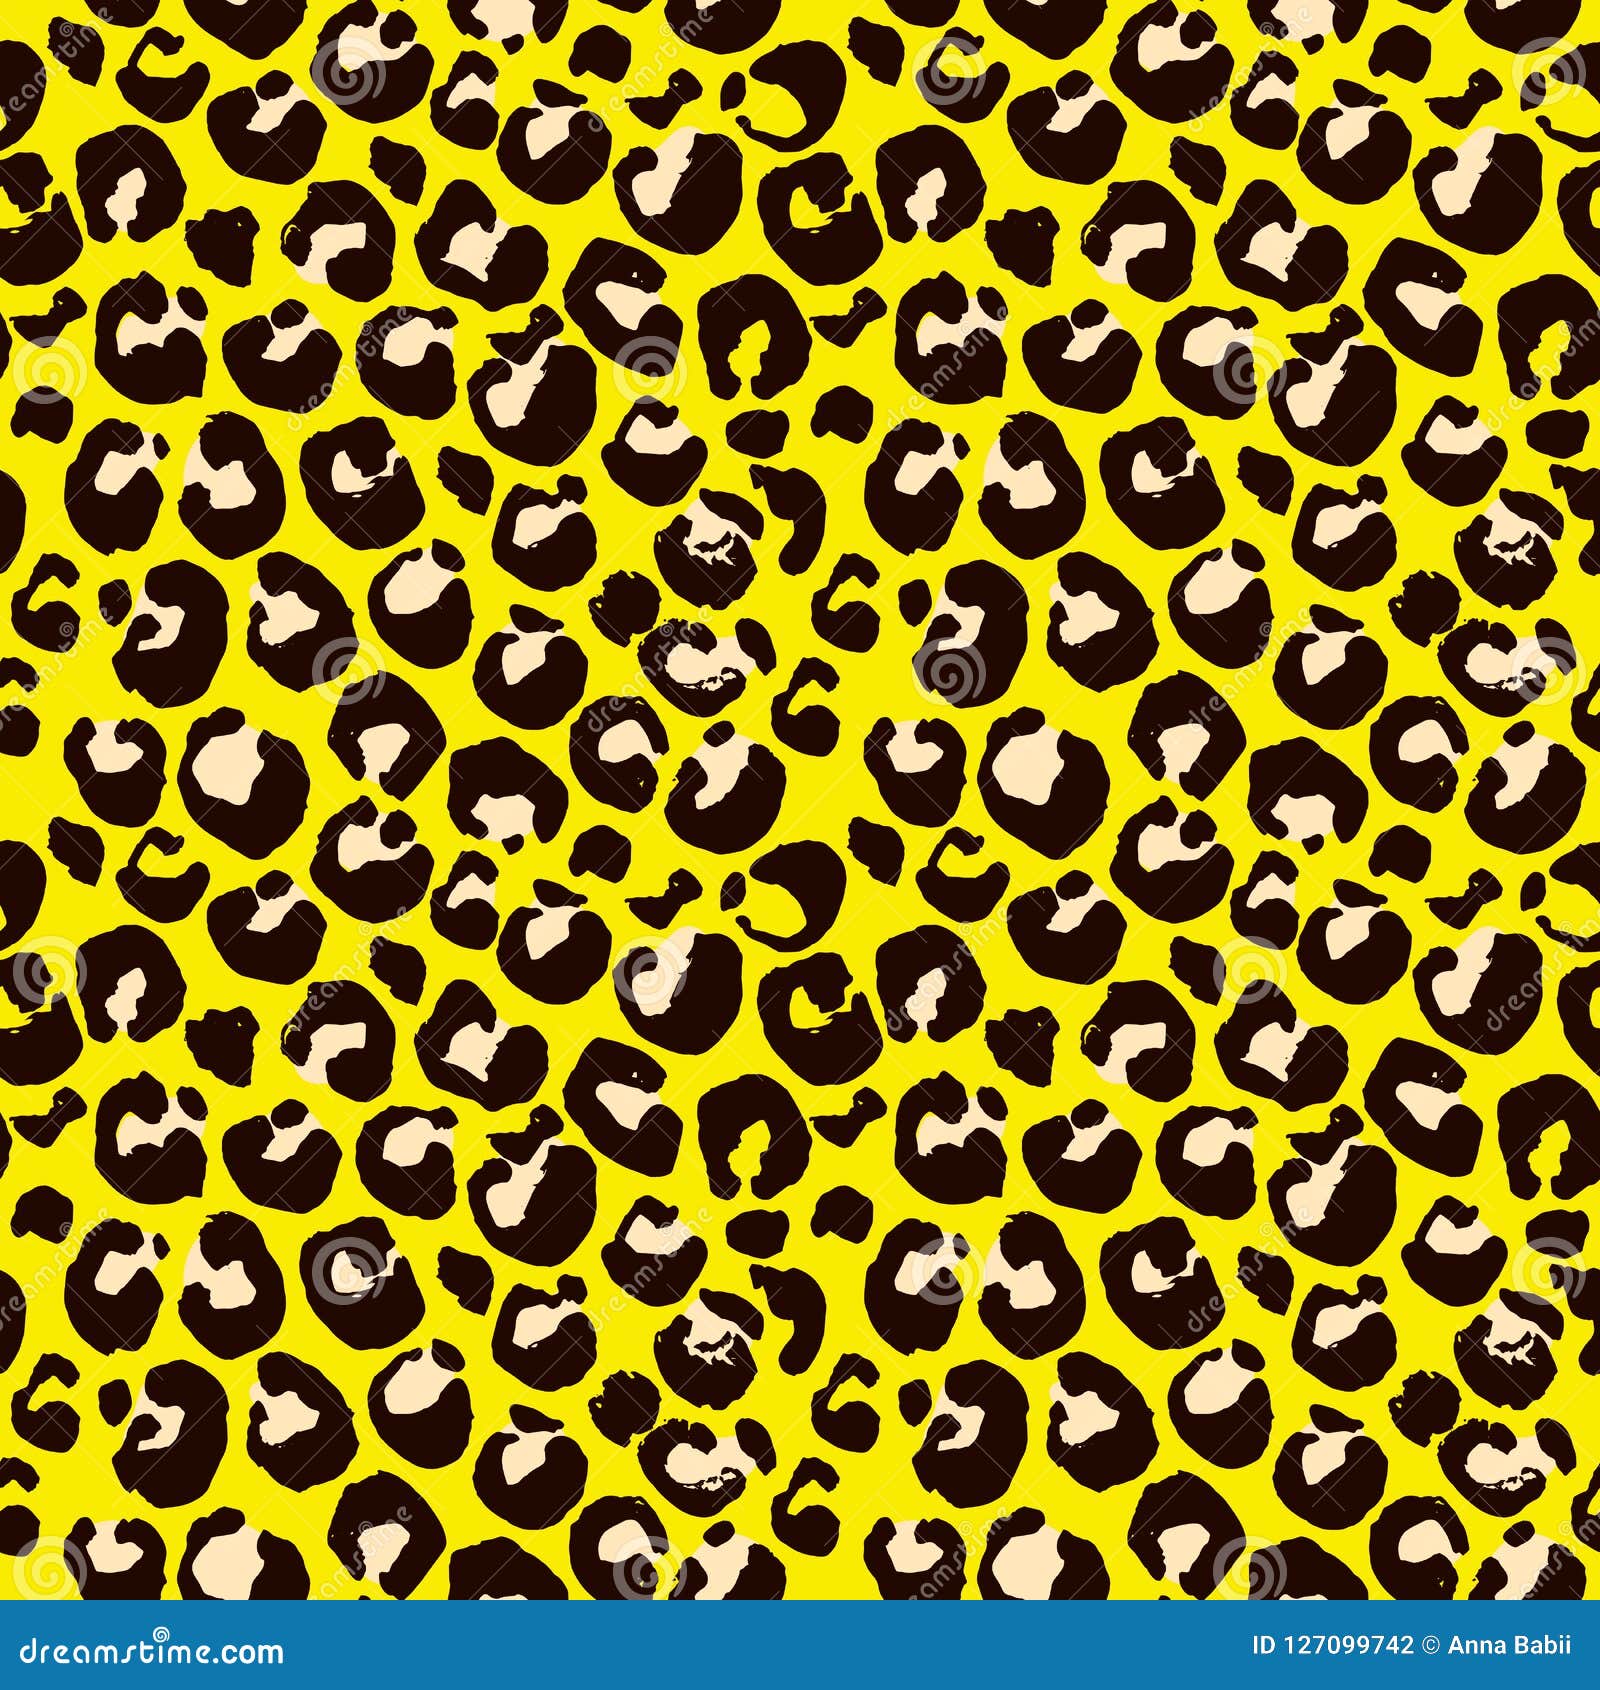 Vector Illustration Leopard Print Seamless Pattern. Yellow Hand Drawn ...